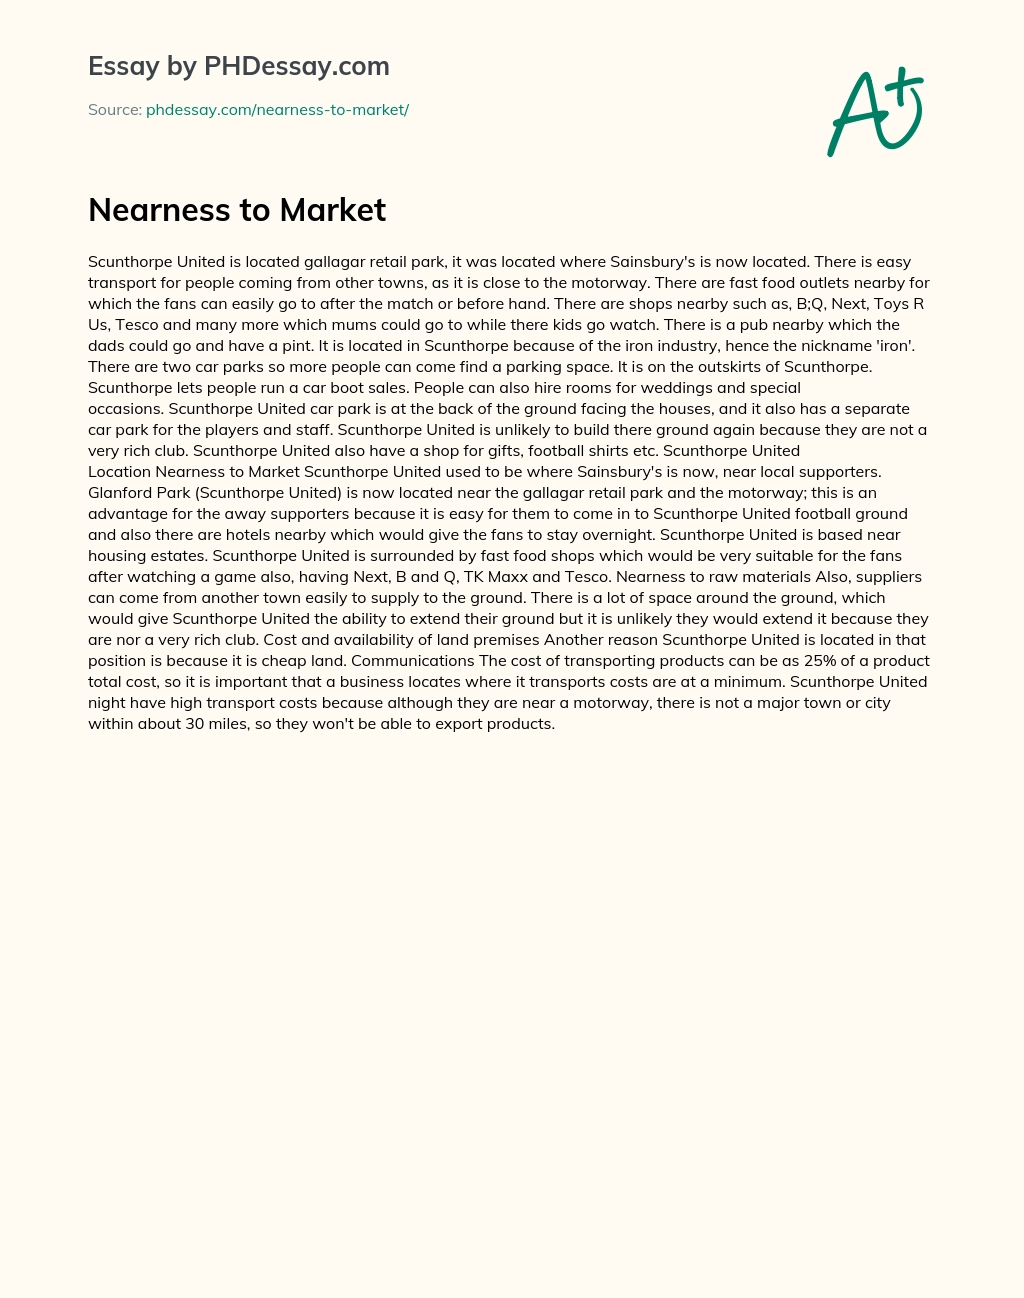 Nearness to Market essay